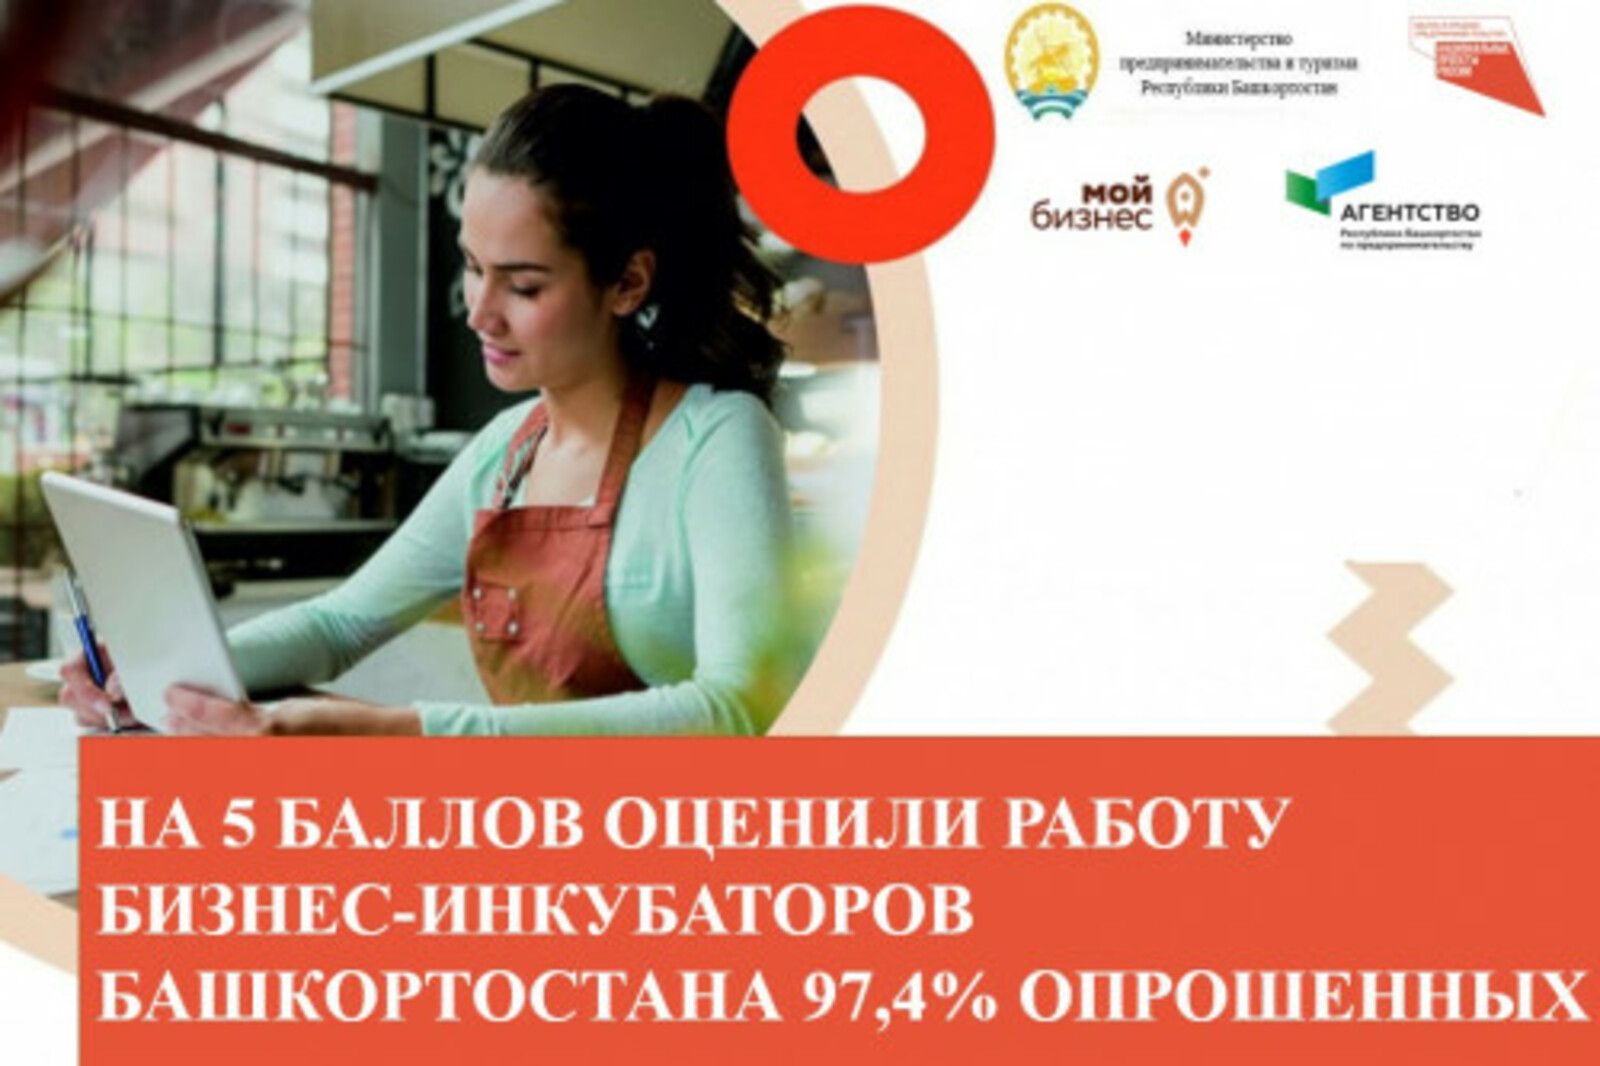 Предприниматели одобрили работу бизнес-инкубаторов Башкортостана